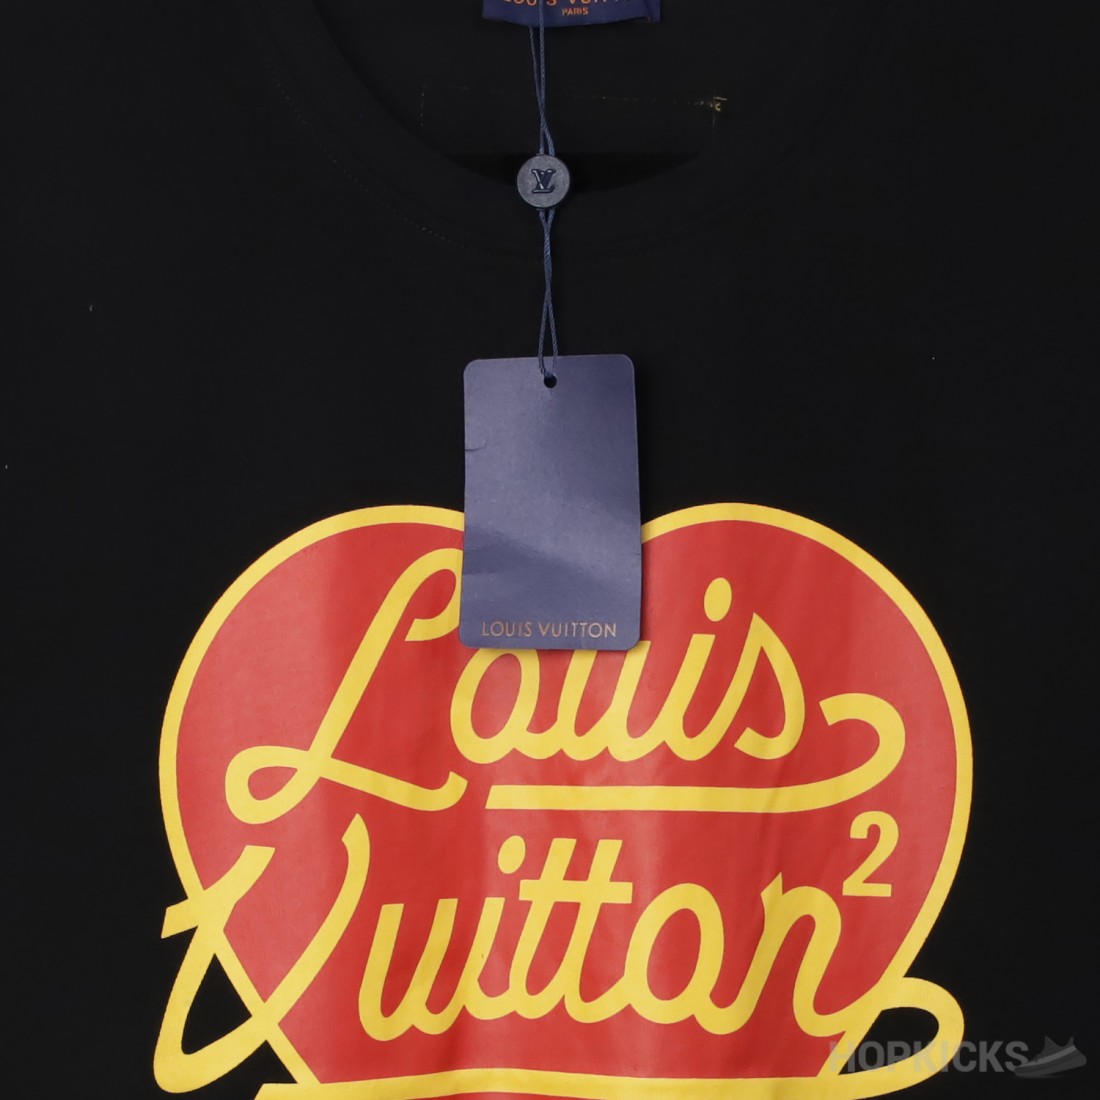 Louis Vuitton Intarsia Jacquard Heart Crewneck dark ocean tee shirt sz L